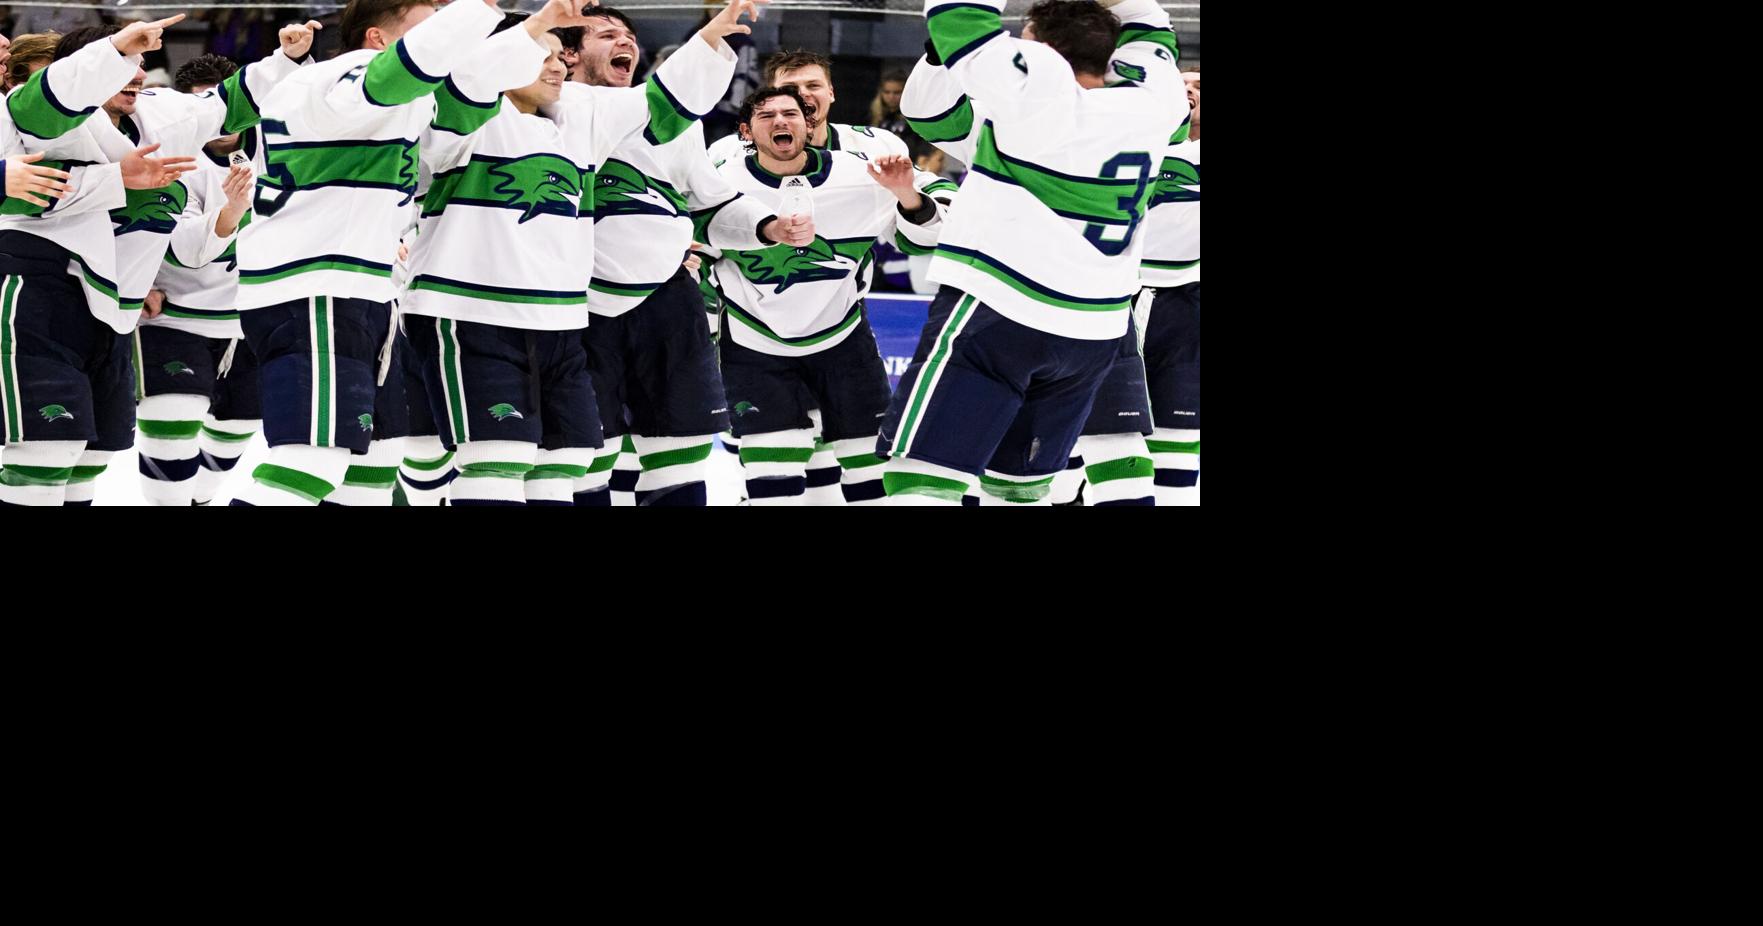 Endicott Men's Hockey Wins CCC Championship on March 4, 2023